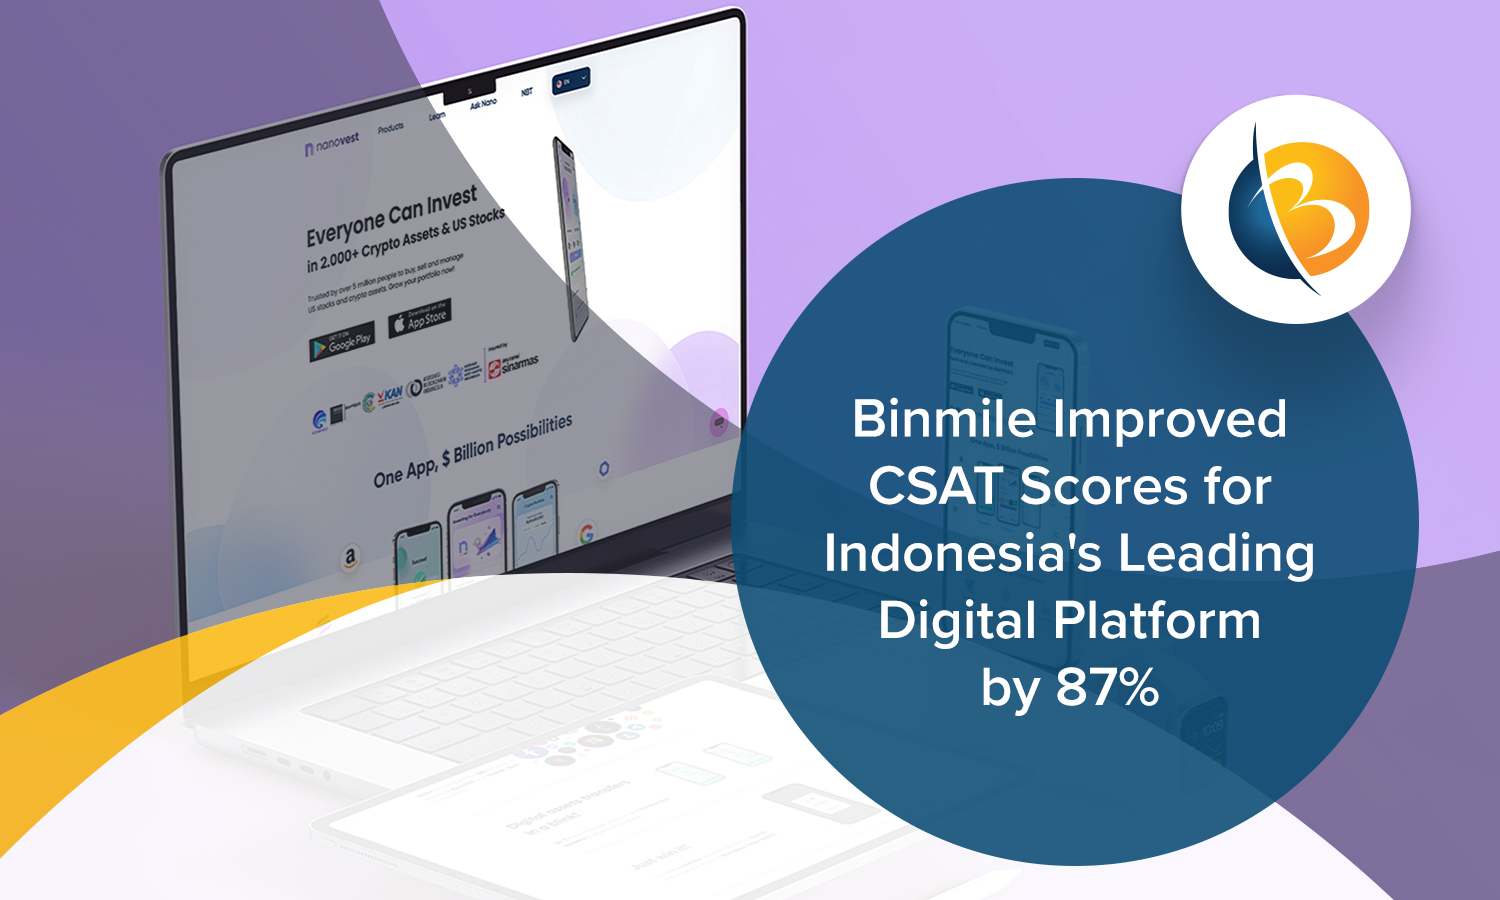 Binmile Improved CSAT Scores for Indonesia's Leading Digital Platform by 87 percent 